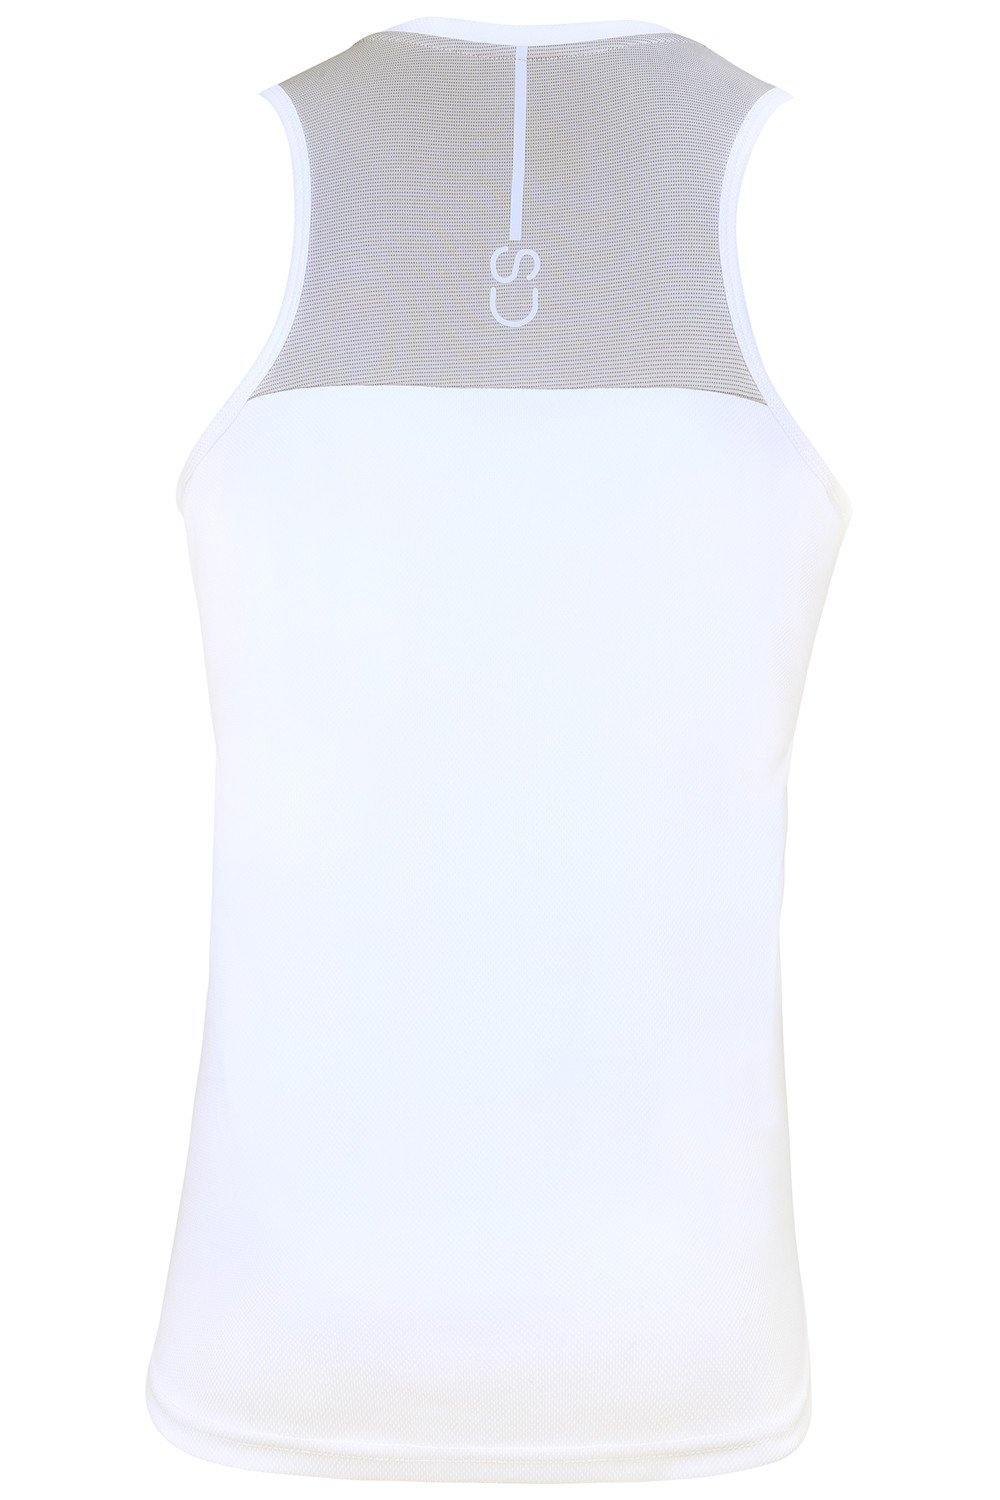 Sundried Dom 2.0 Men's Recycled Running Vest Vest Activewear